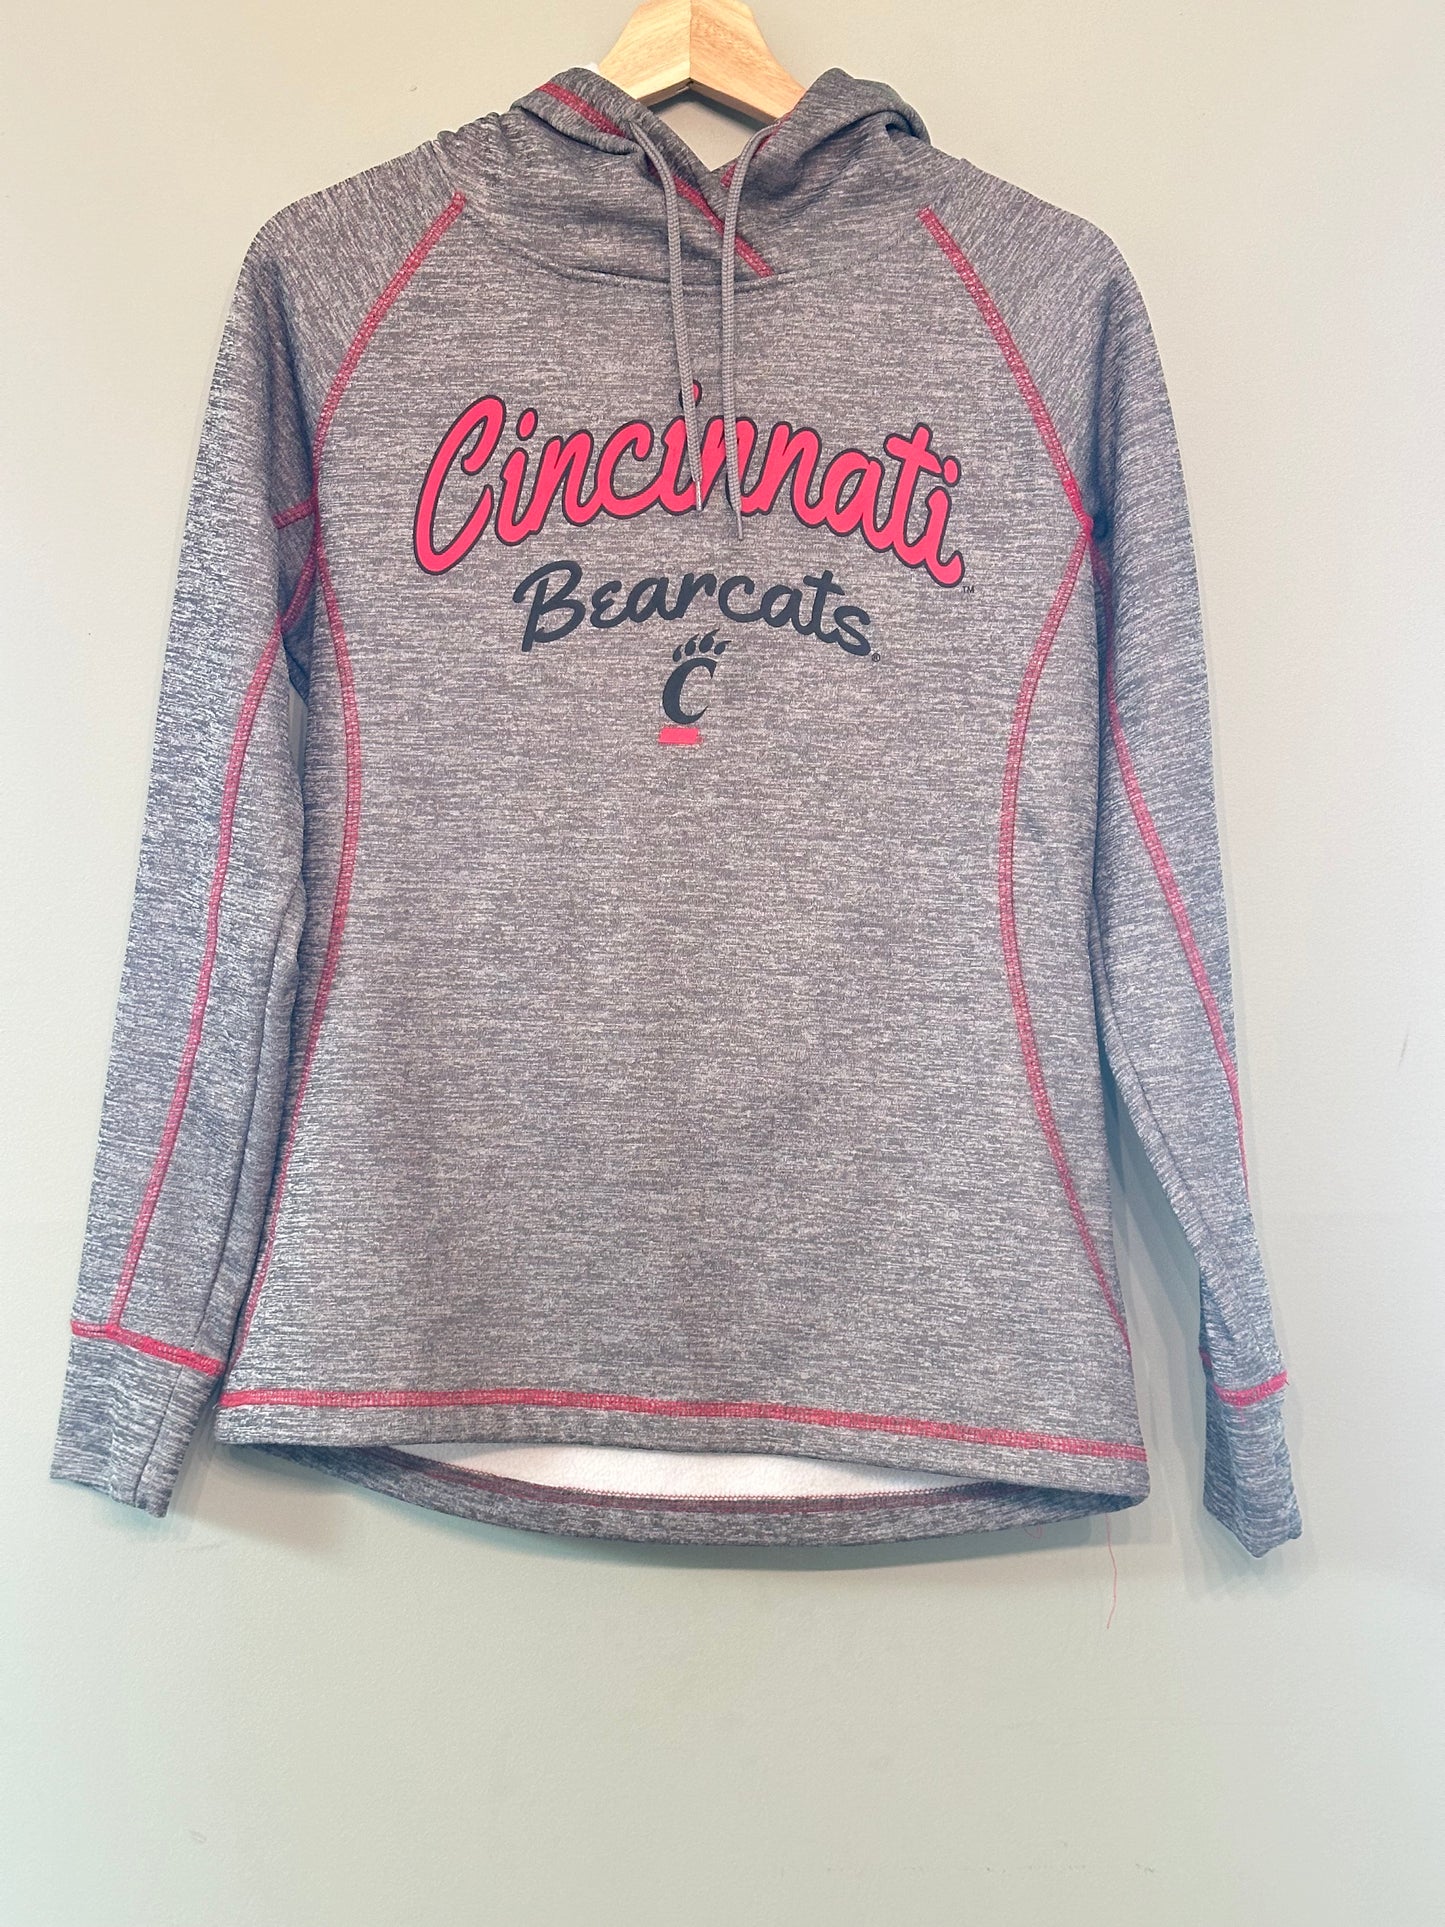 Cincinnati Bearcats Women’s Medium (fits like small) Gray Fleece Hoodie Sweatshirt